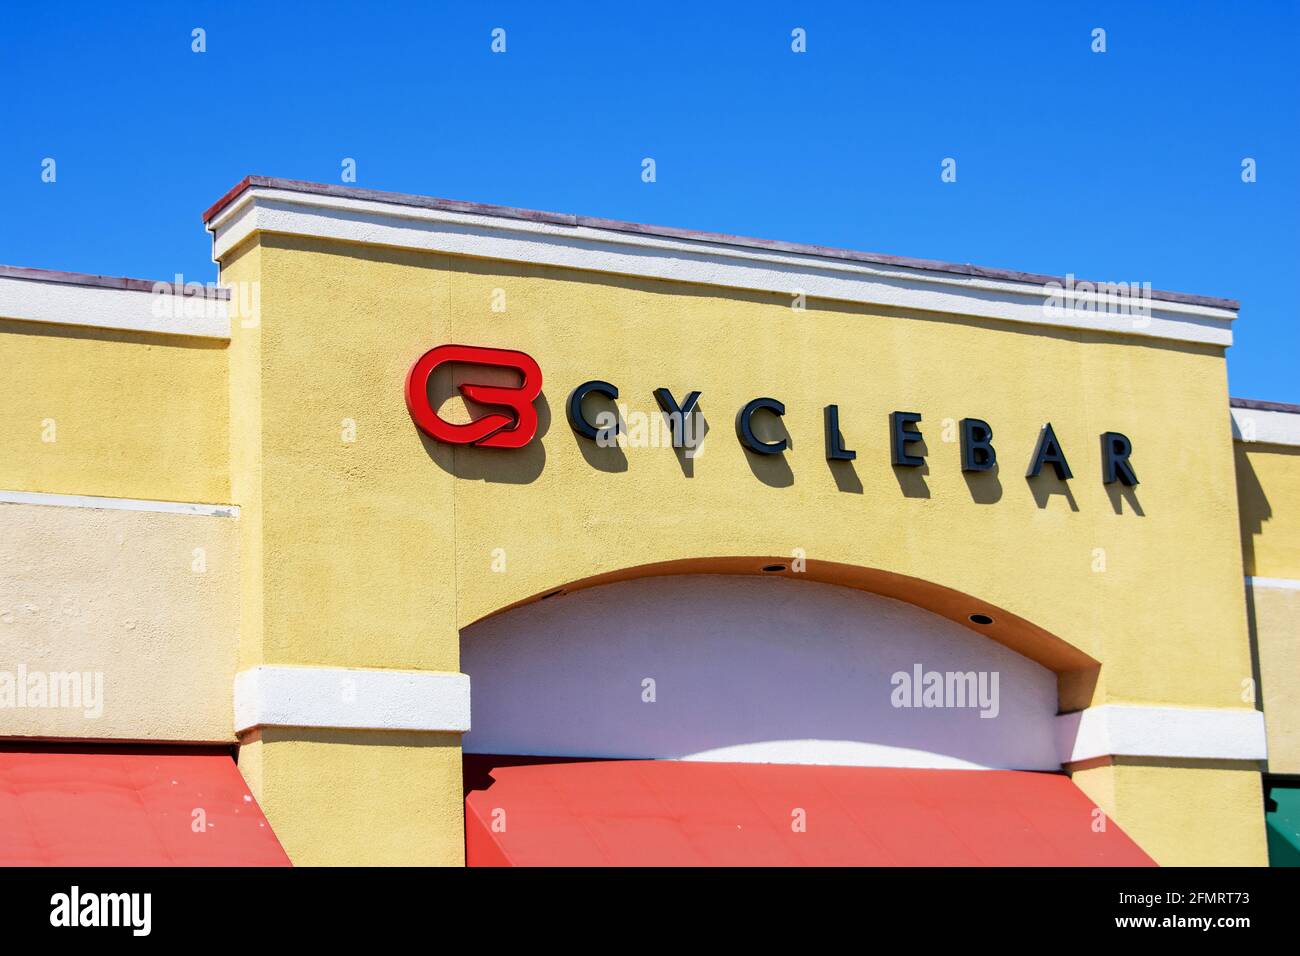 CycleBar sign, logo on fitness cycling studio location - San Jose California, USA - 2021 Stock Photo